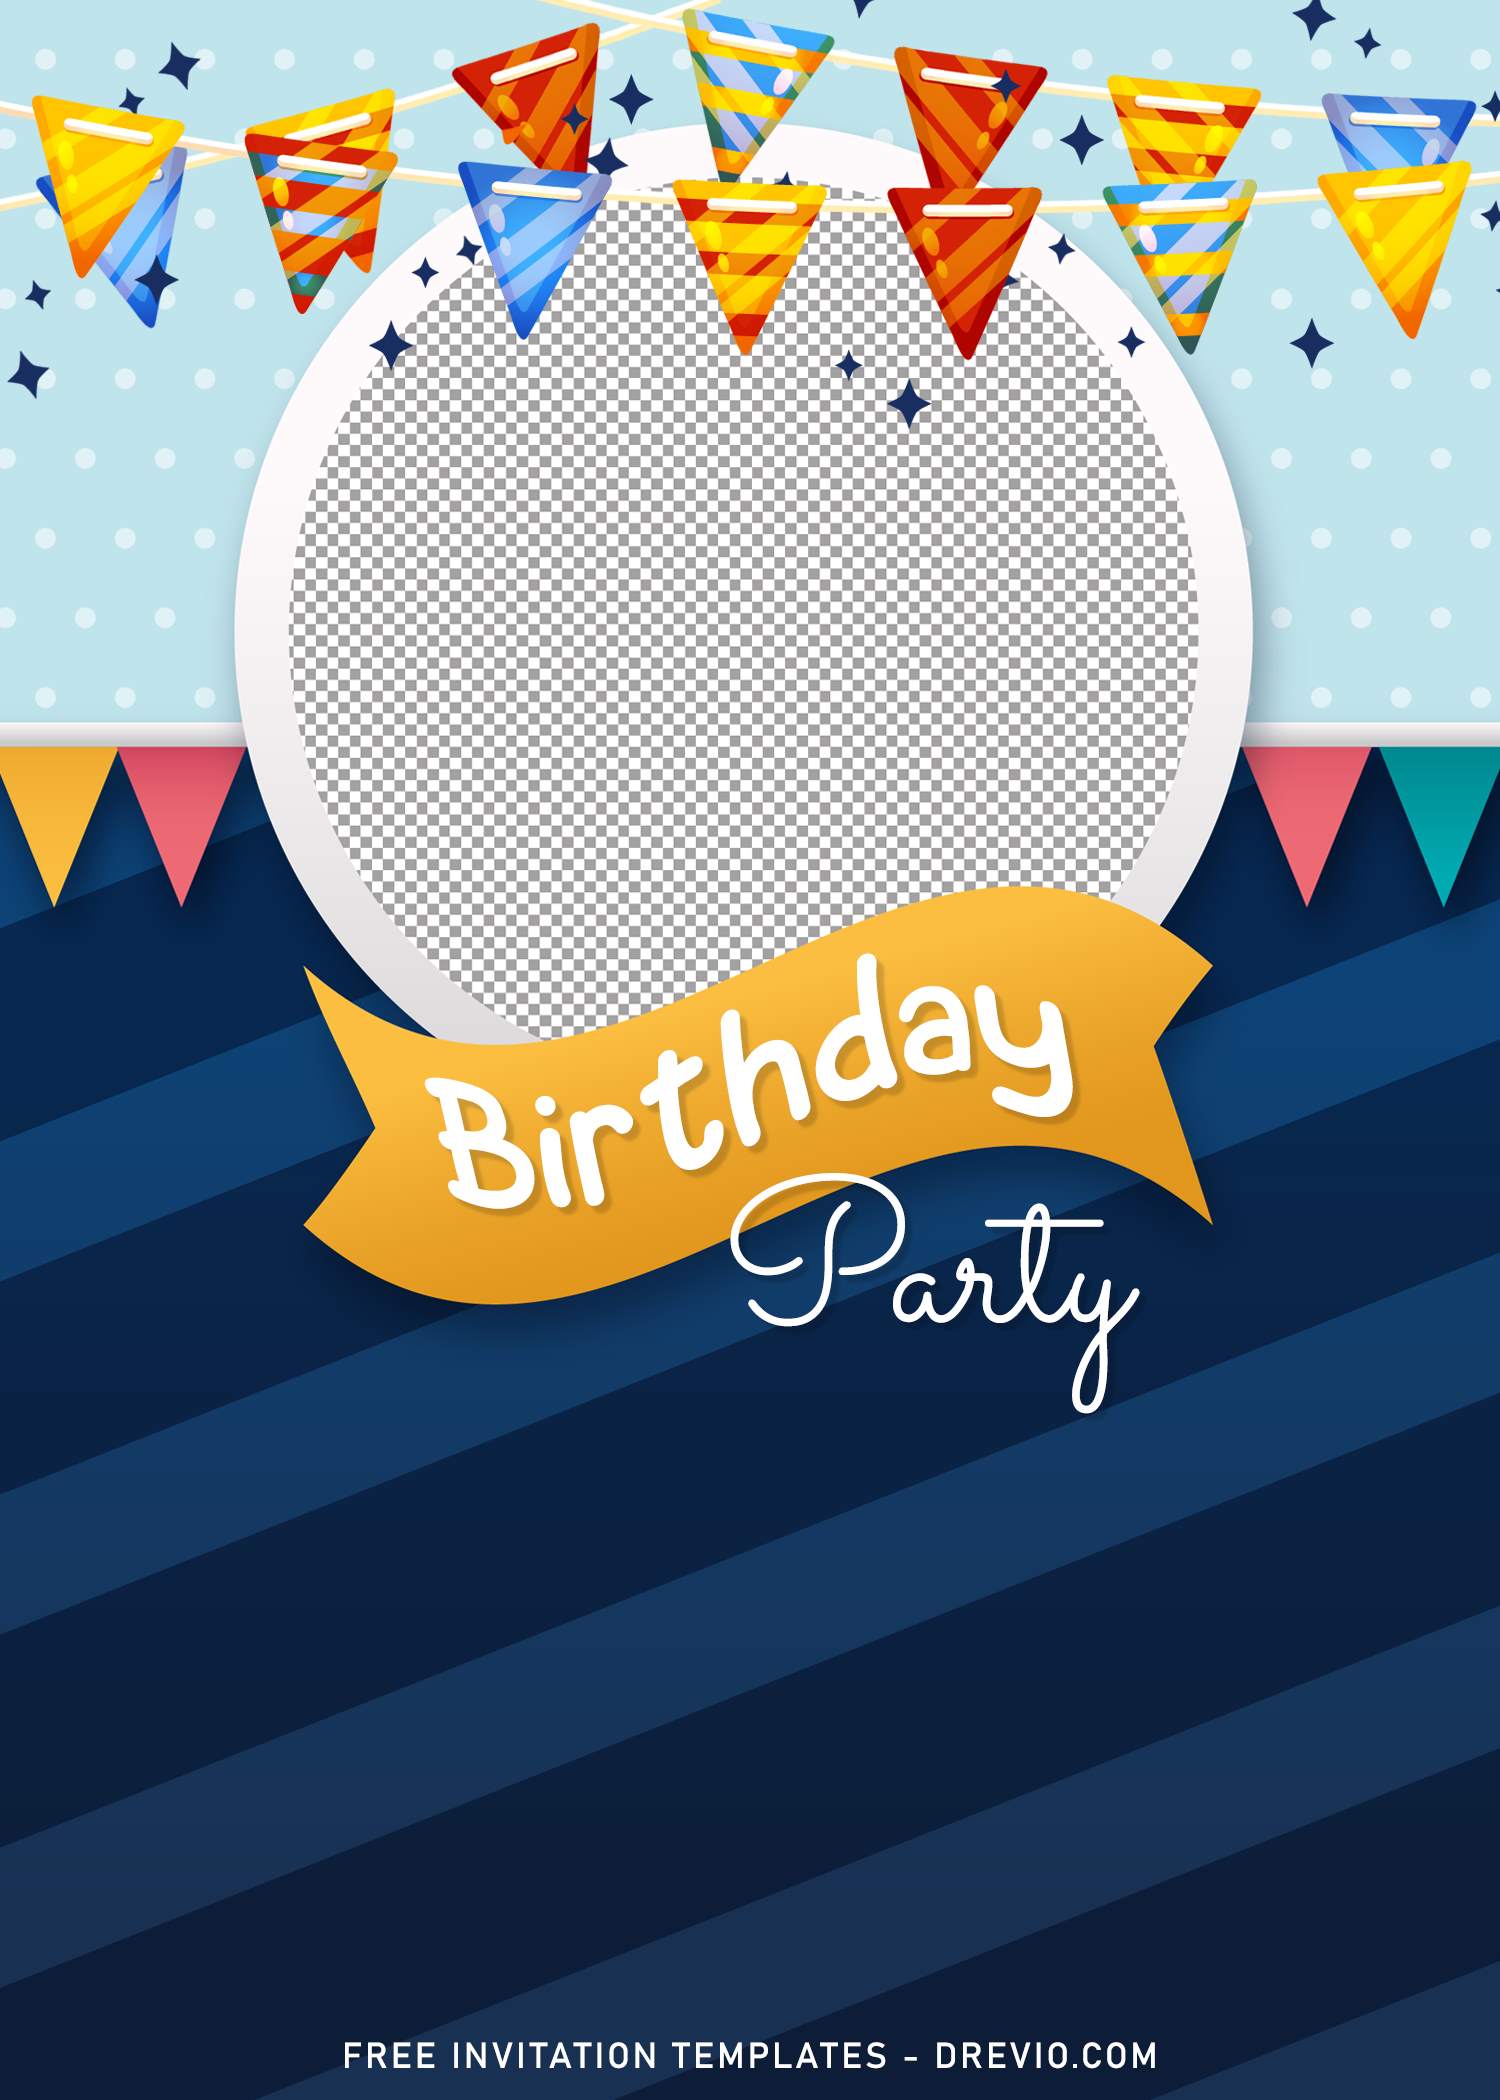 Free Online Custom Birthday Invitation Maker | Adobe Express